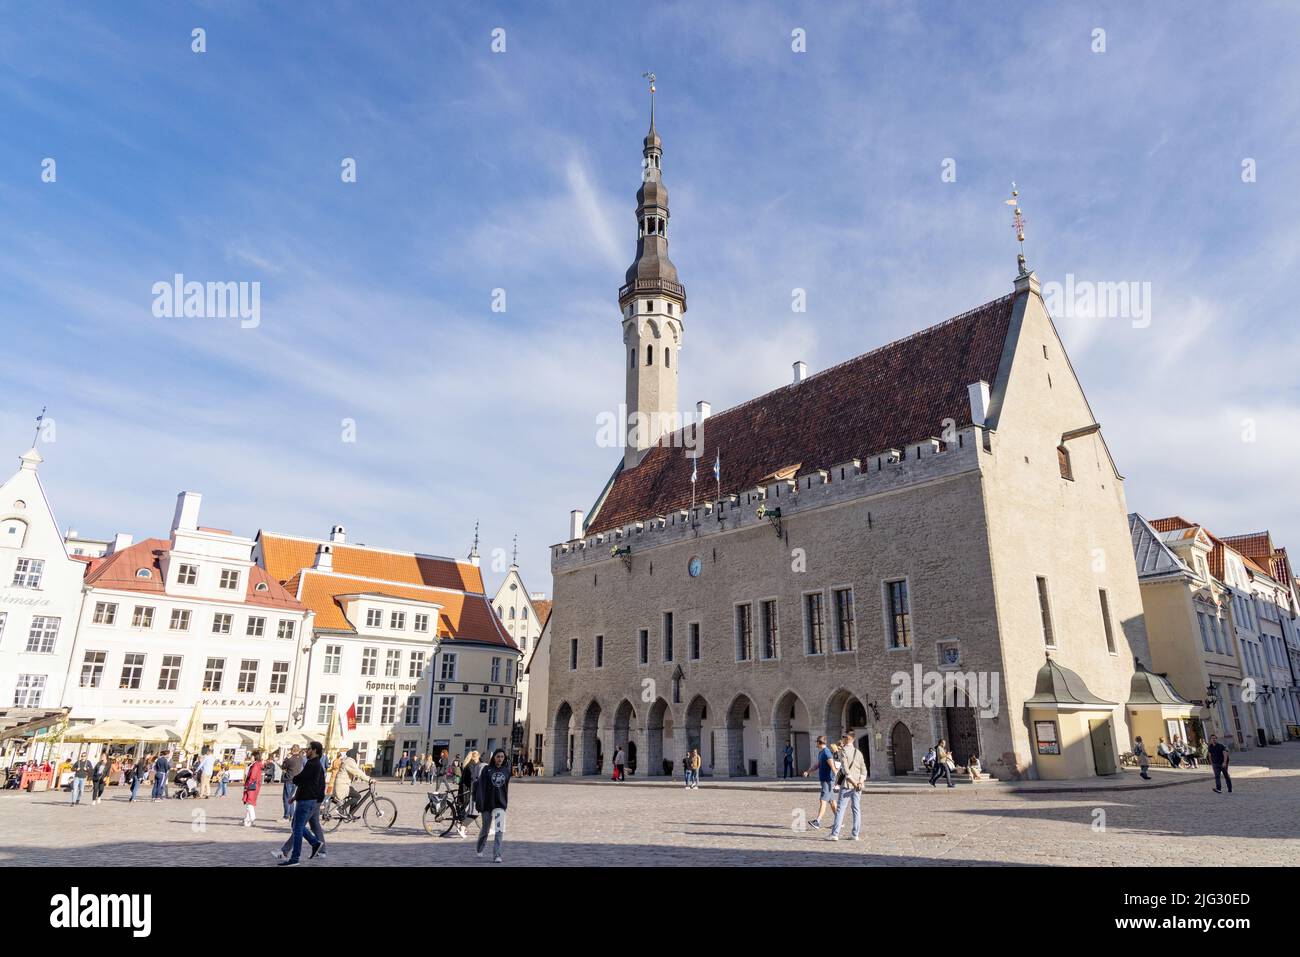 Estonia travel; Tallinn Old Town Square with Tallinn Town Hall, a 14th century gothic building in summer, Tallinn Estonia Europe Stock Photo